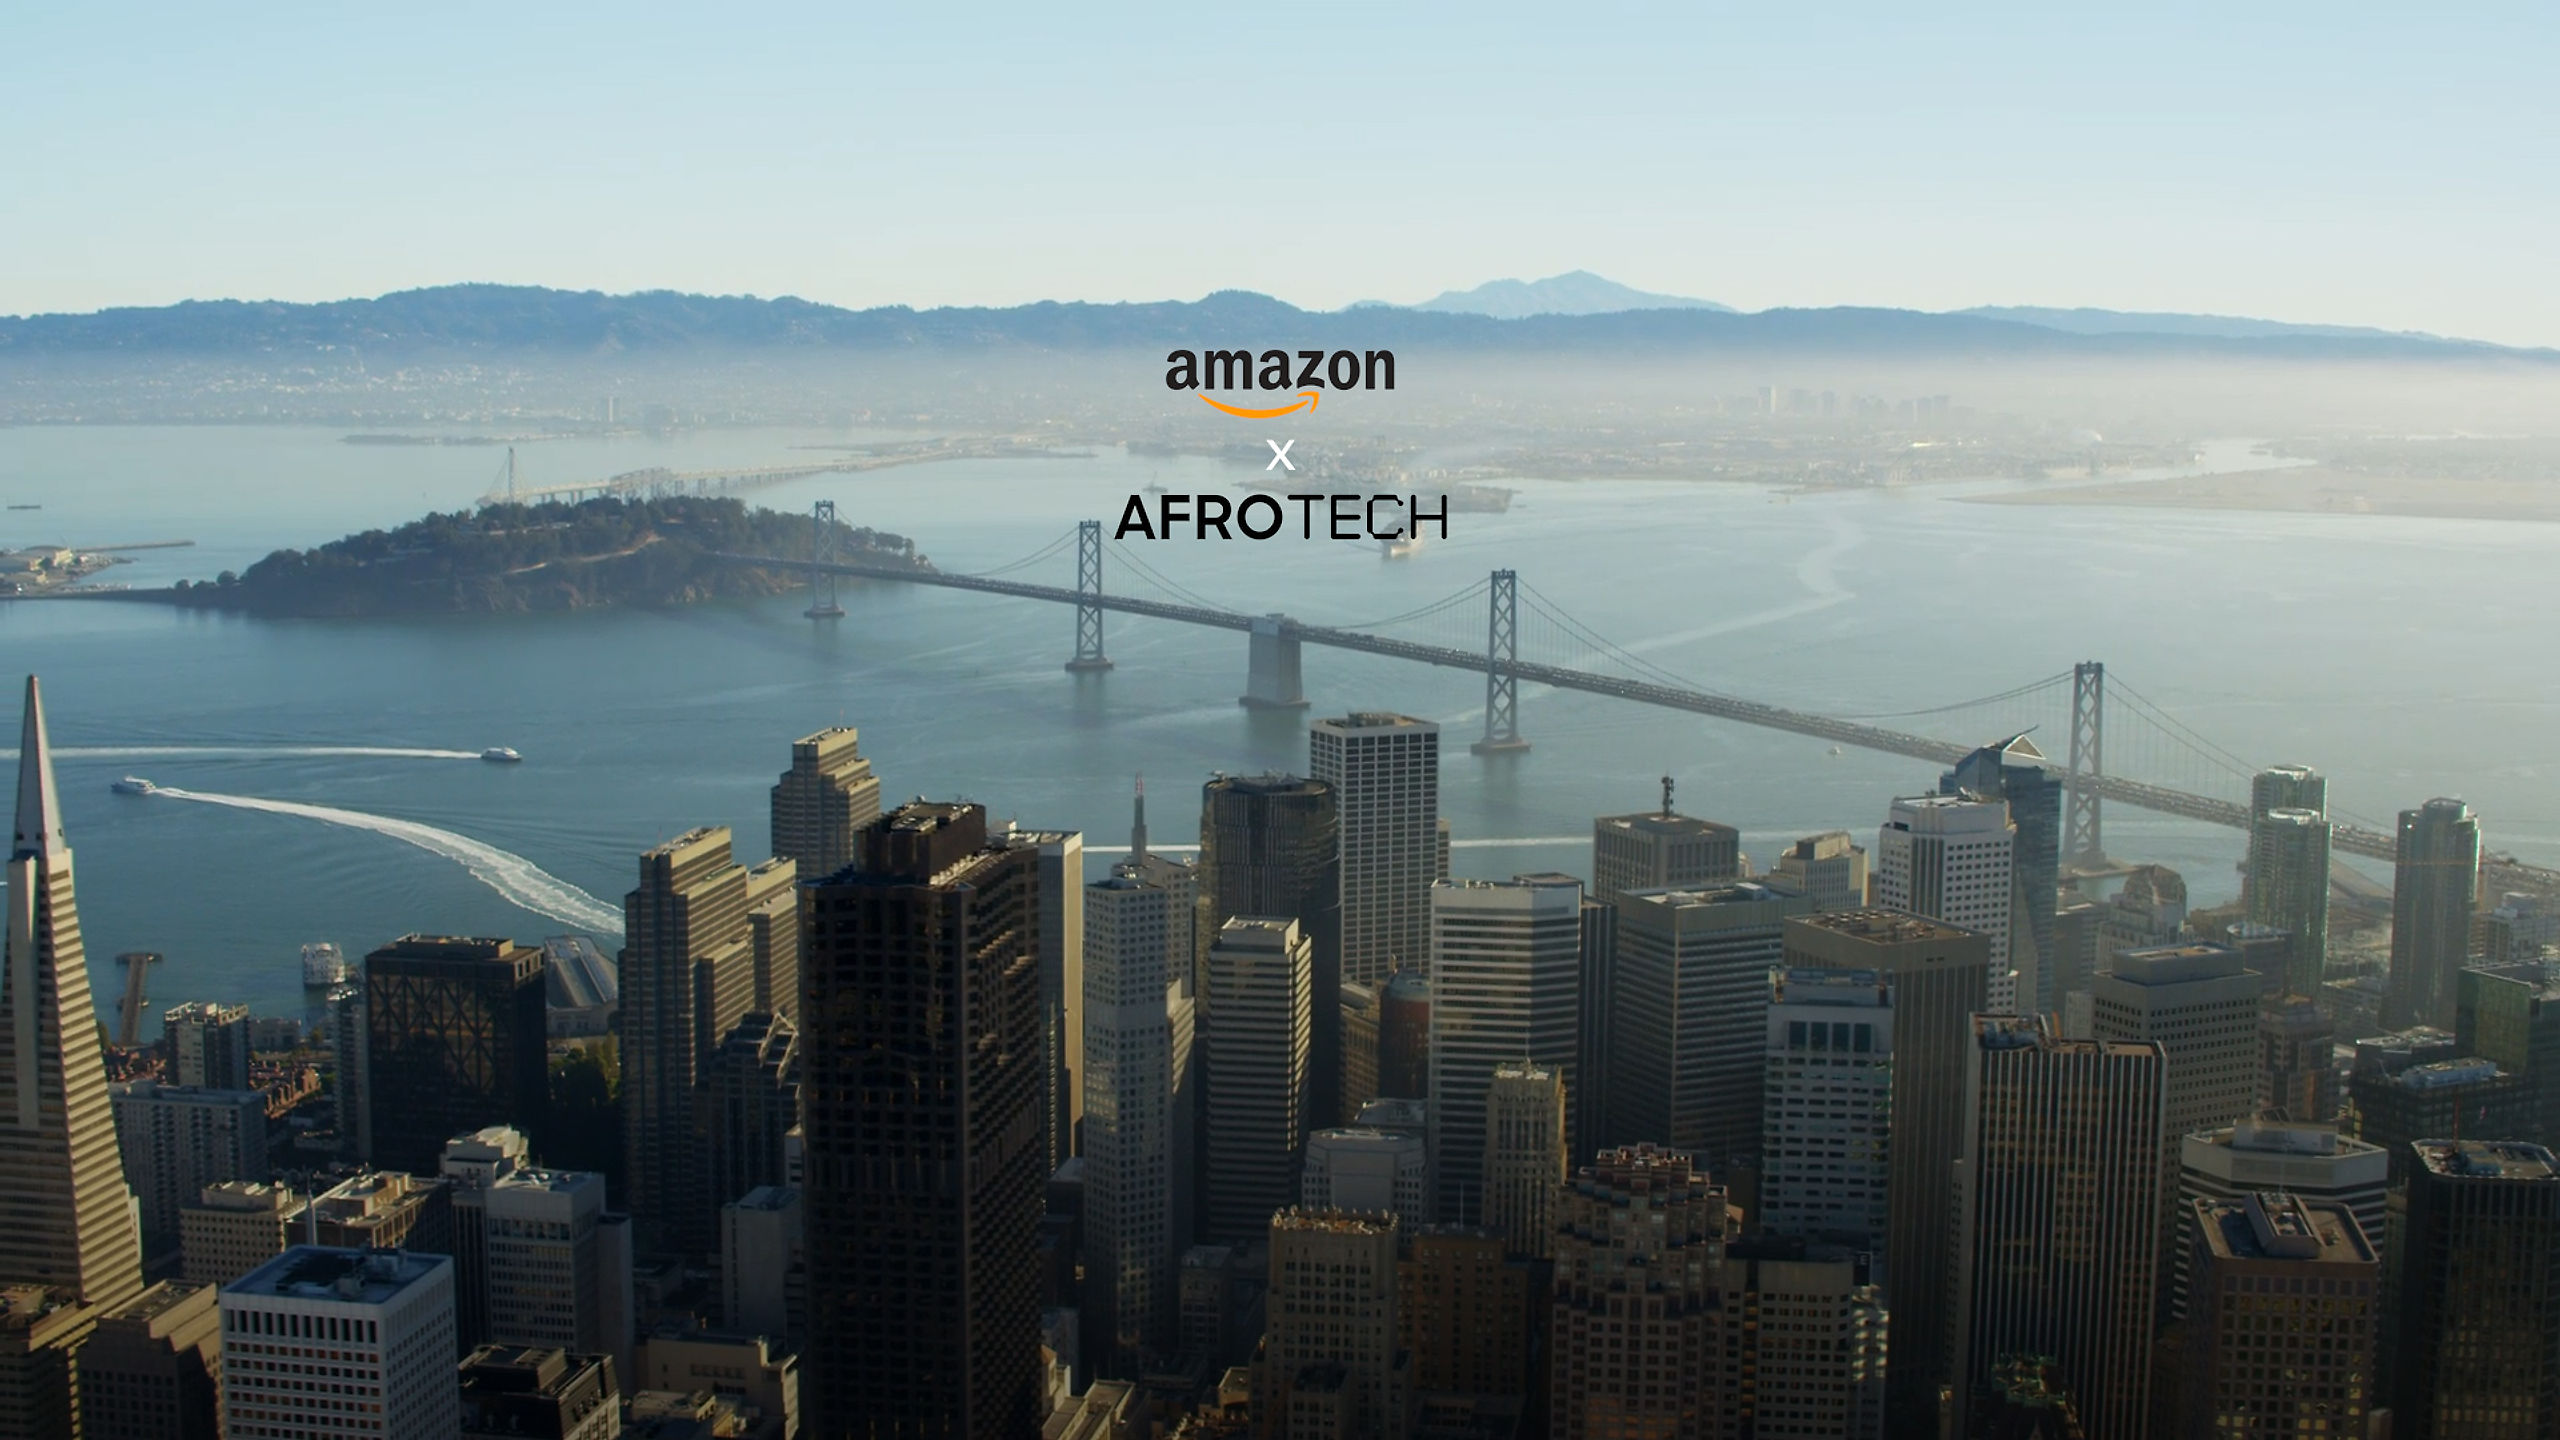 Amazon x Afrotech